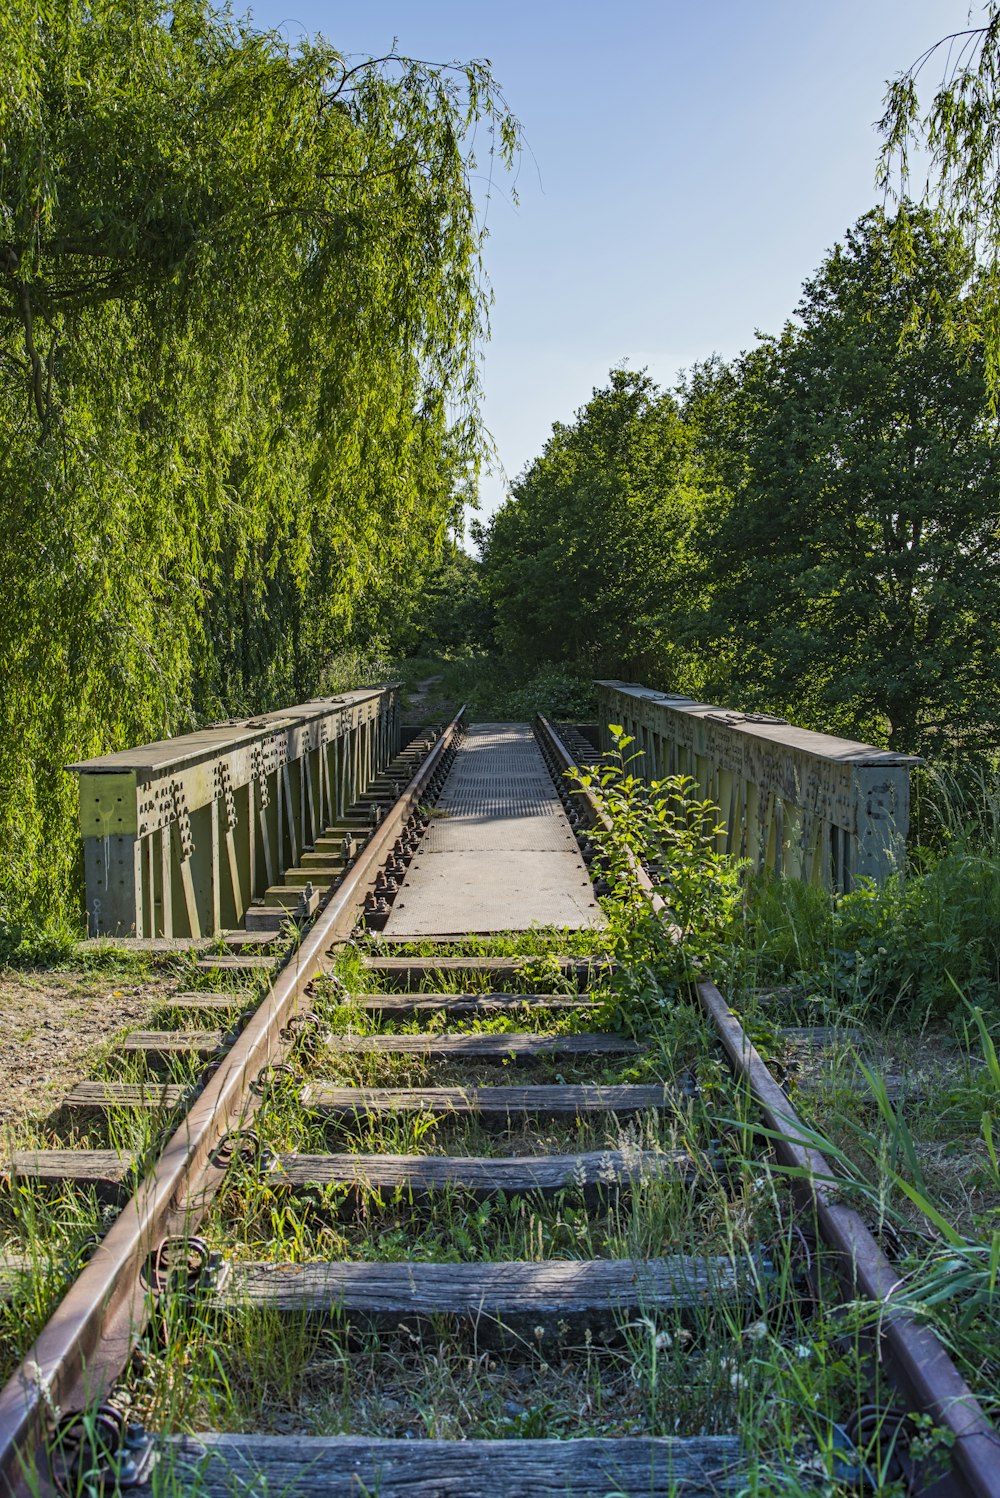 brown wooden bridge in between green trees during daytime